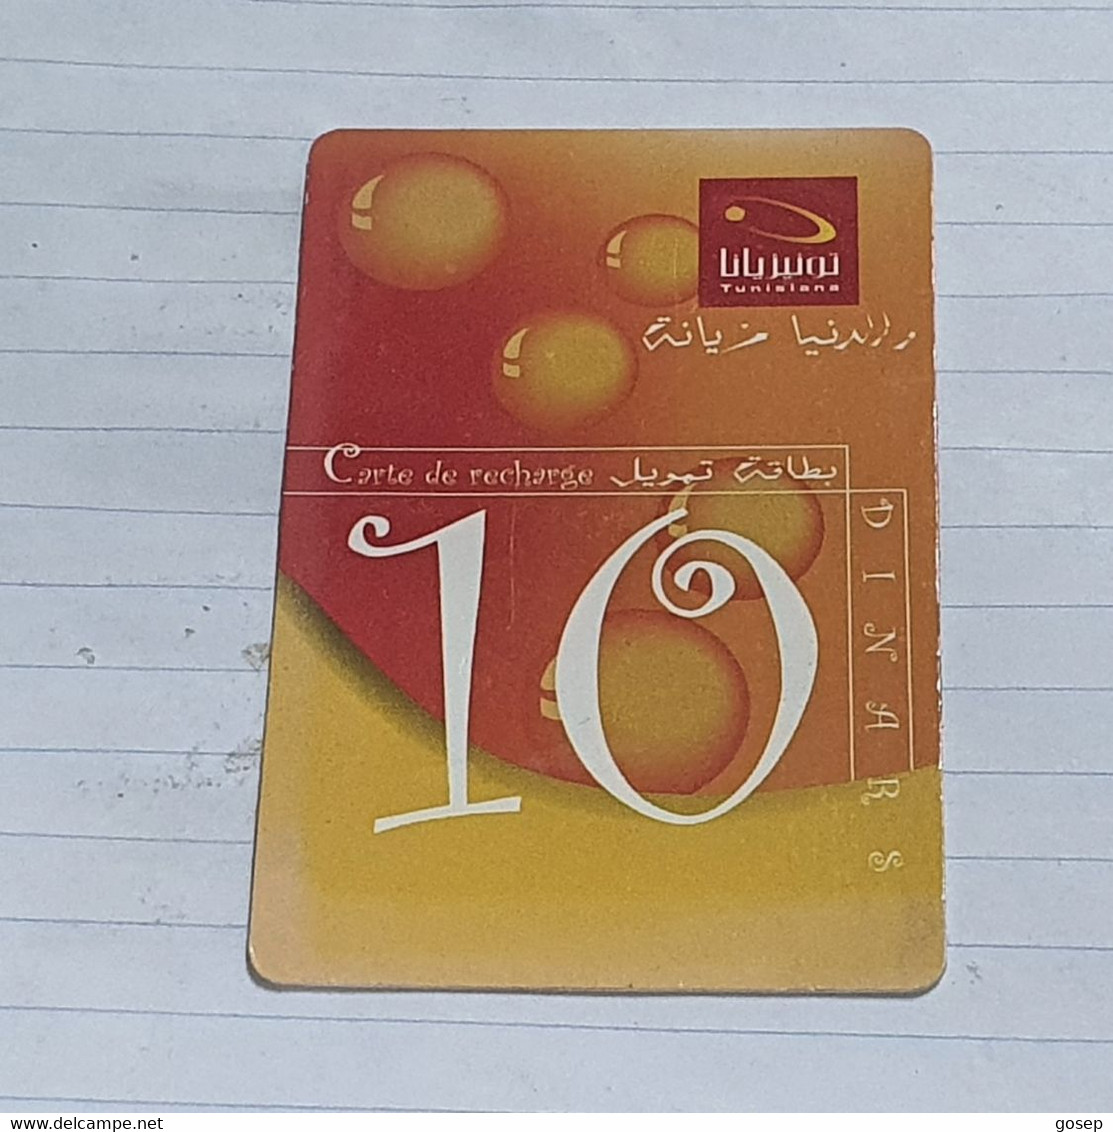 TUNISIA-(TUN-REF-TUN-03)-VIVANTE-(113)(5468-101-5750-700)(?)-(tirage-?)-used Card - Tunisia